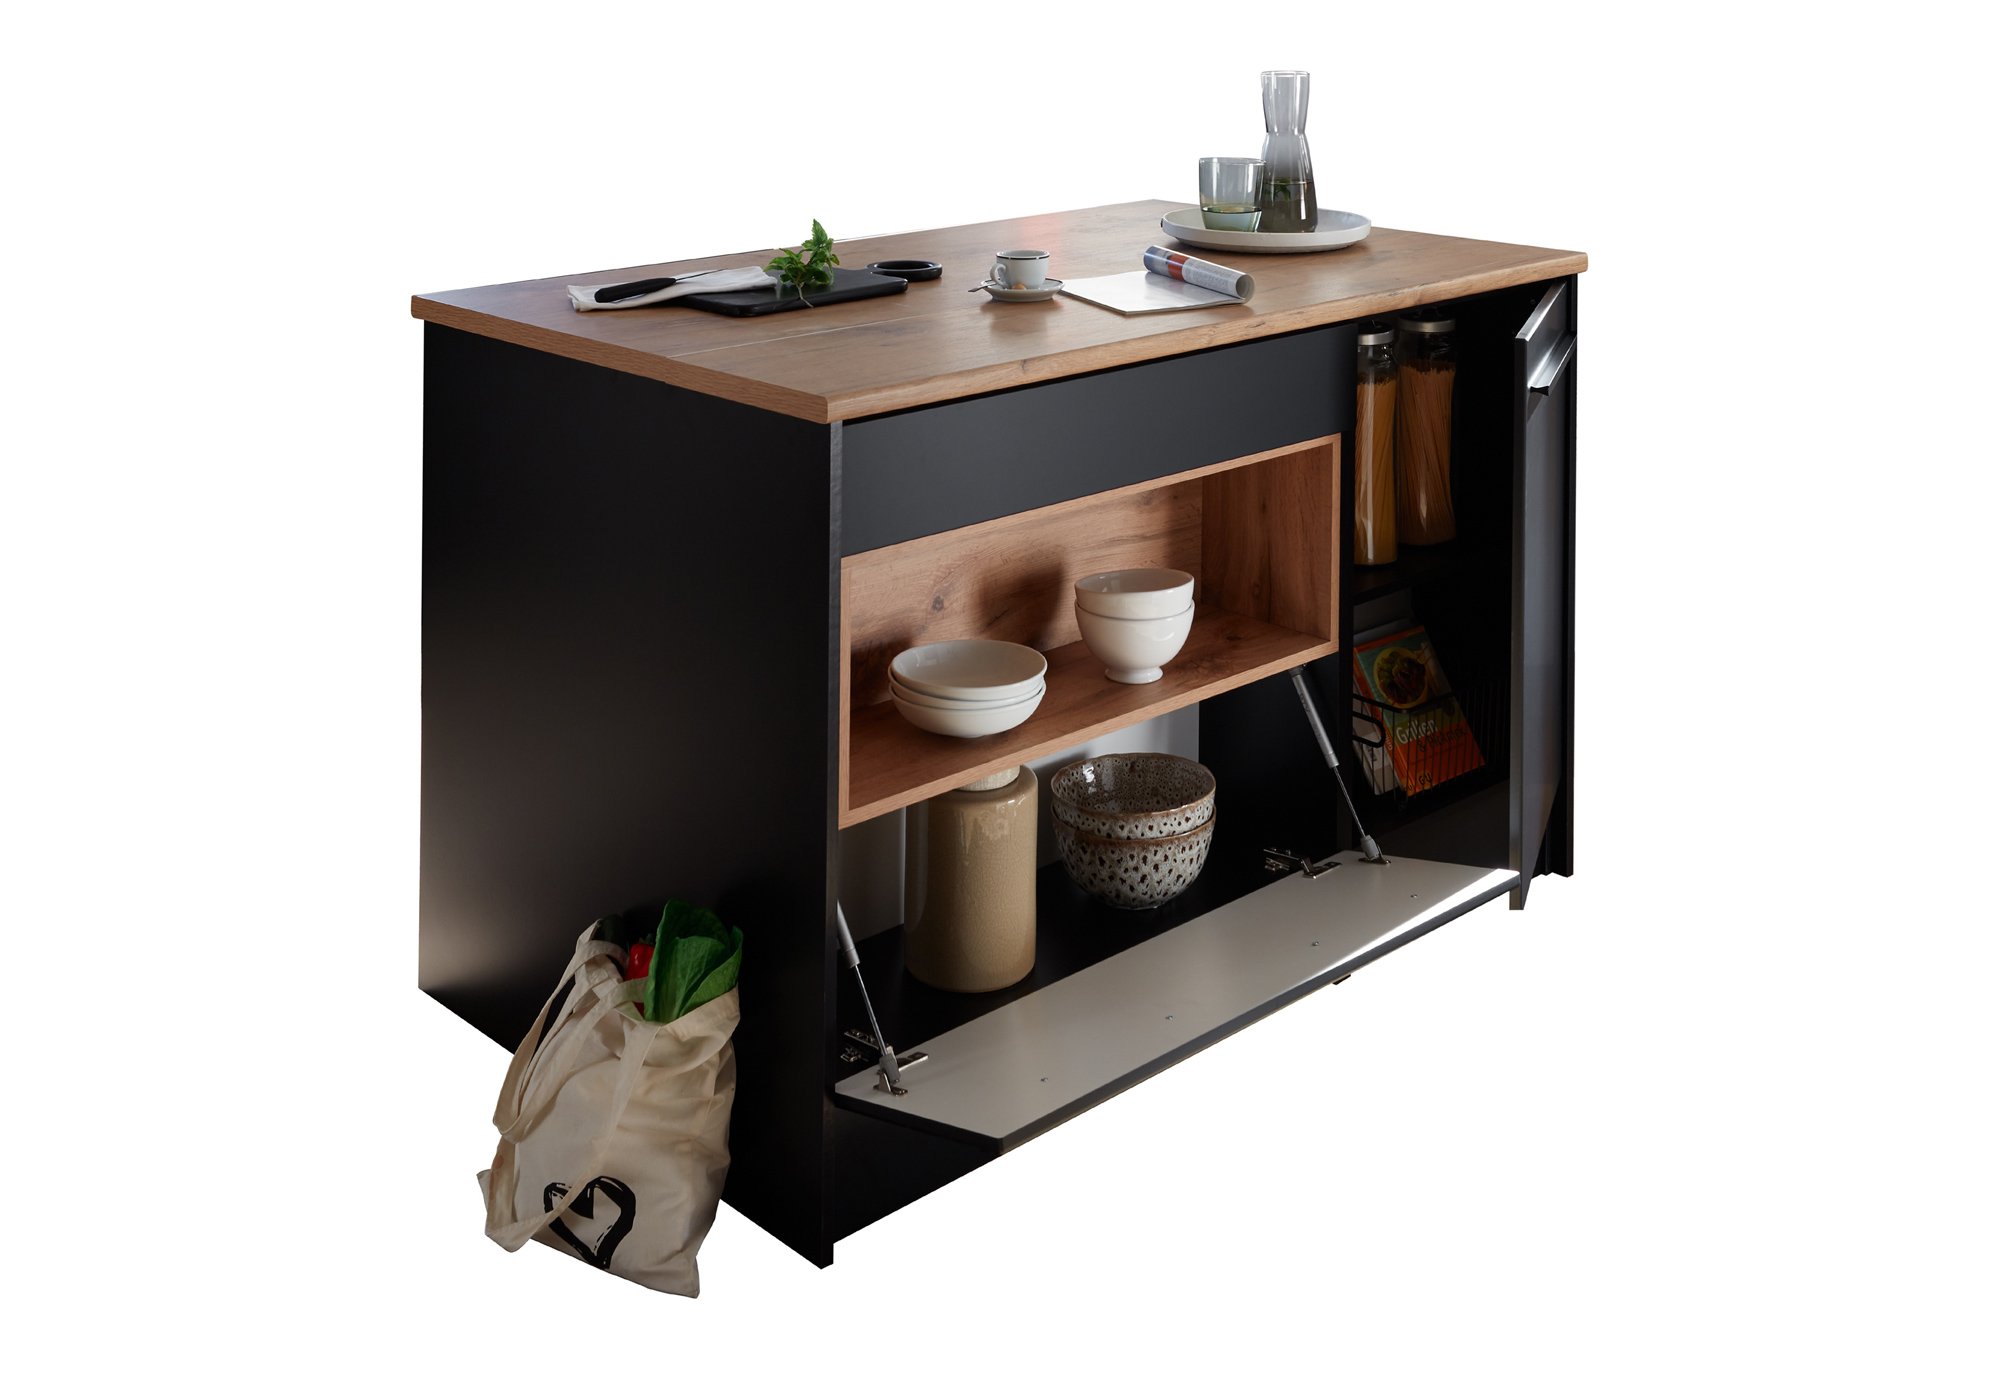 Kücheninsel 145 x 90 cm - ohne Elektrogeräte - schwarz matt - JAZZ